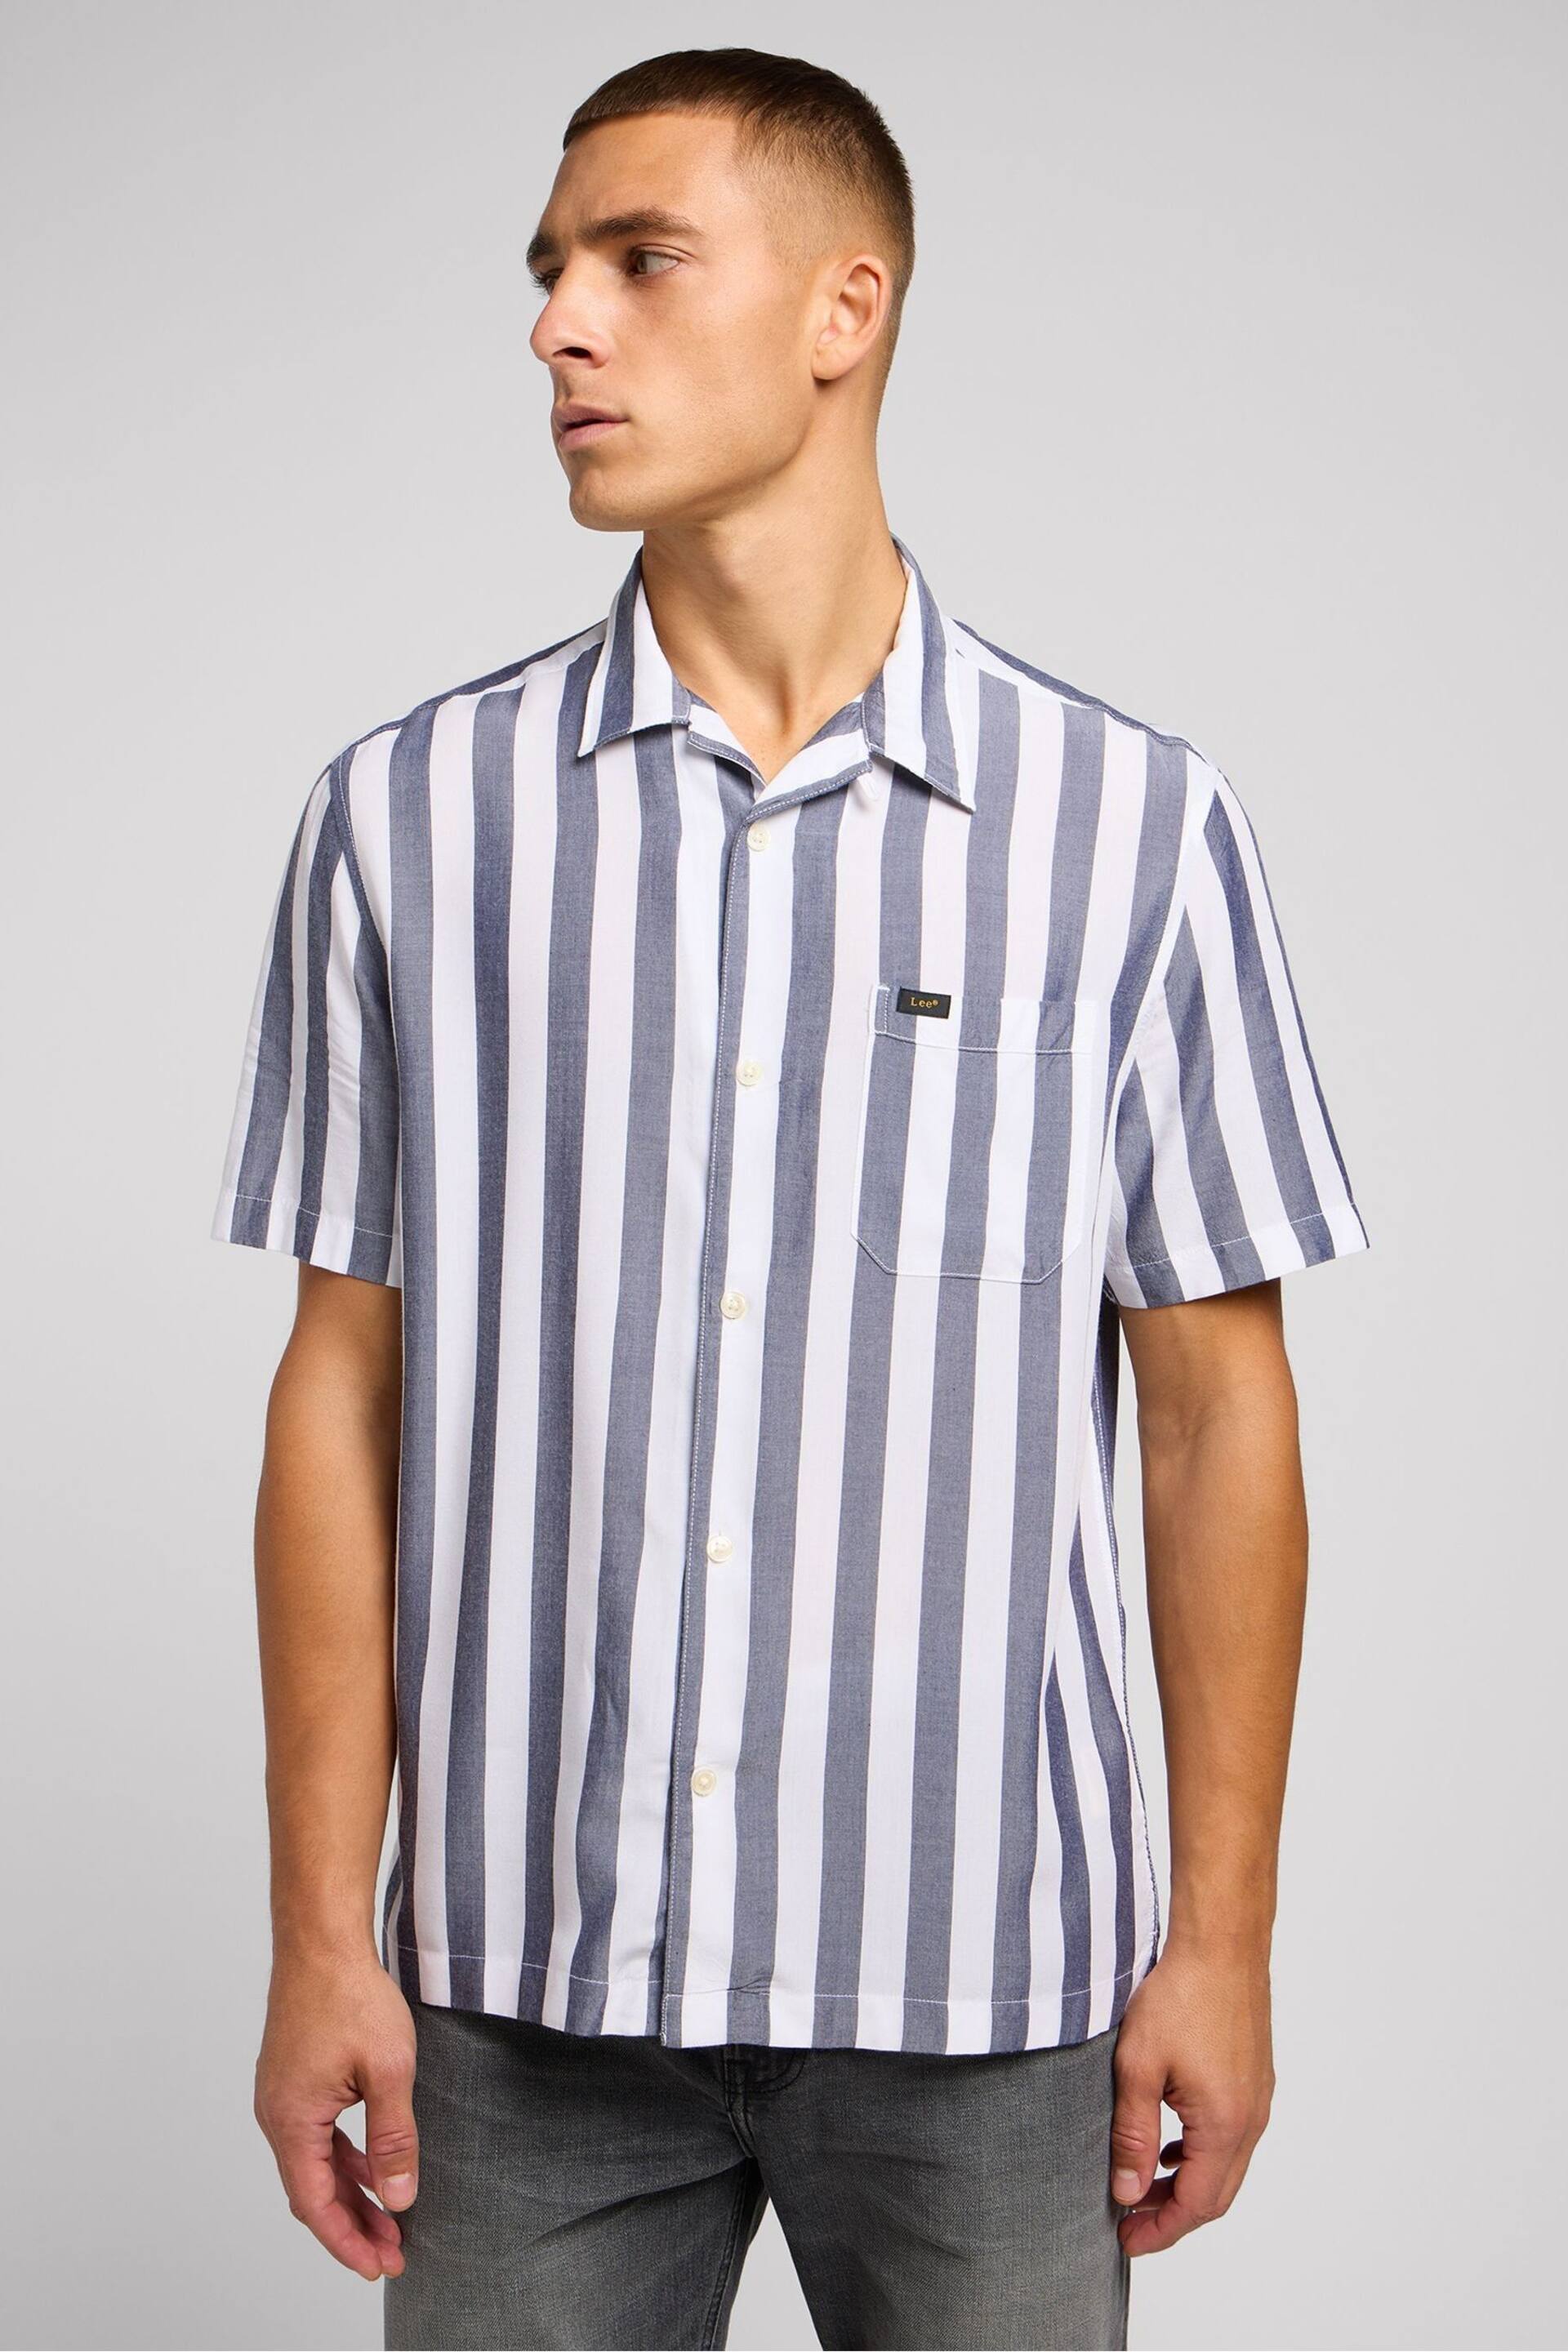 Lee Blue/White Resort Shirt - Image 1 of 4